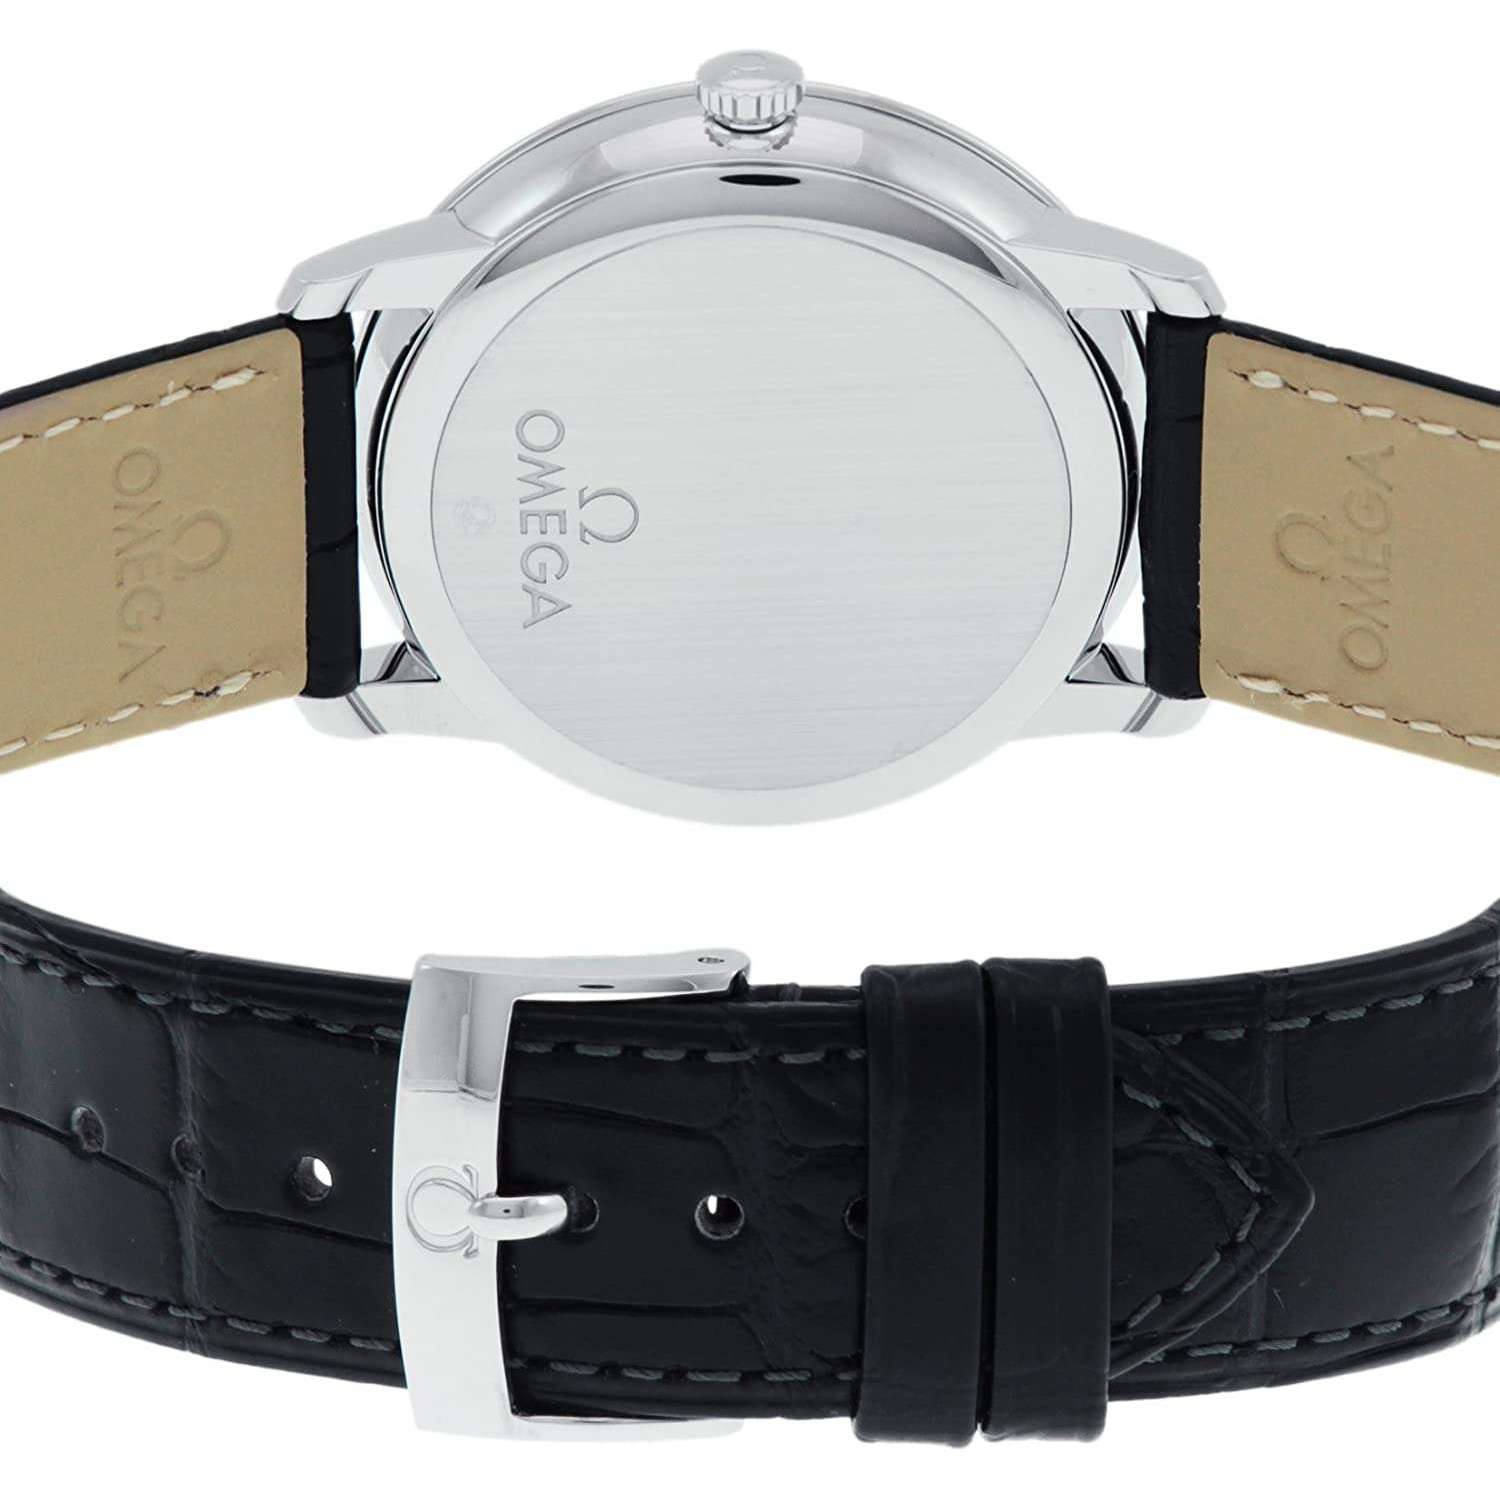 ROOK JAPAN:OMEGA DE VILLE CO‑AXIAL CHRONOMETER 39.5 MM MEN WATCH 424.13.40.20.03.001,Luxury Watch,Omega